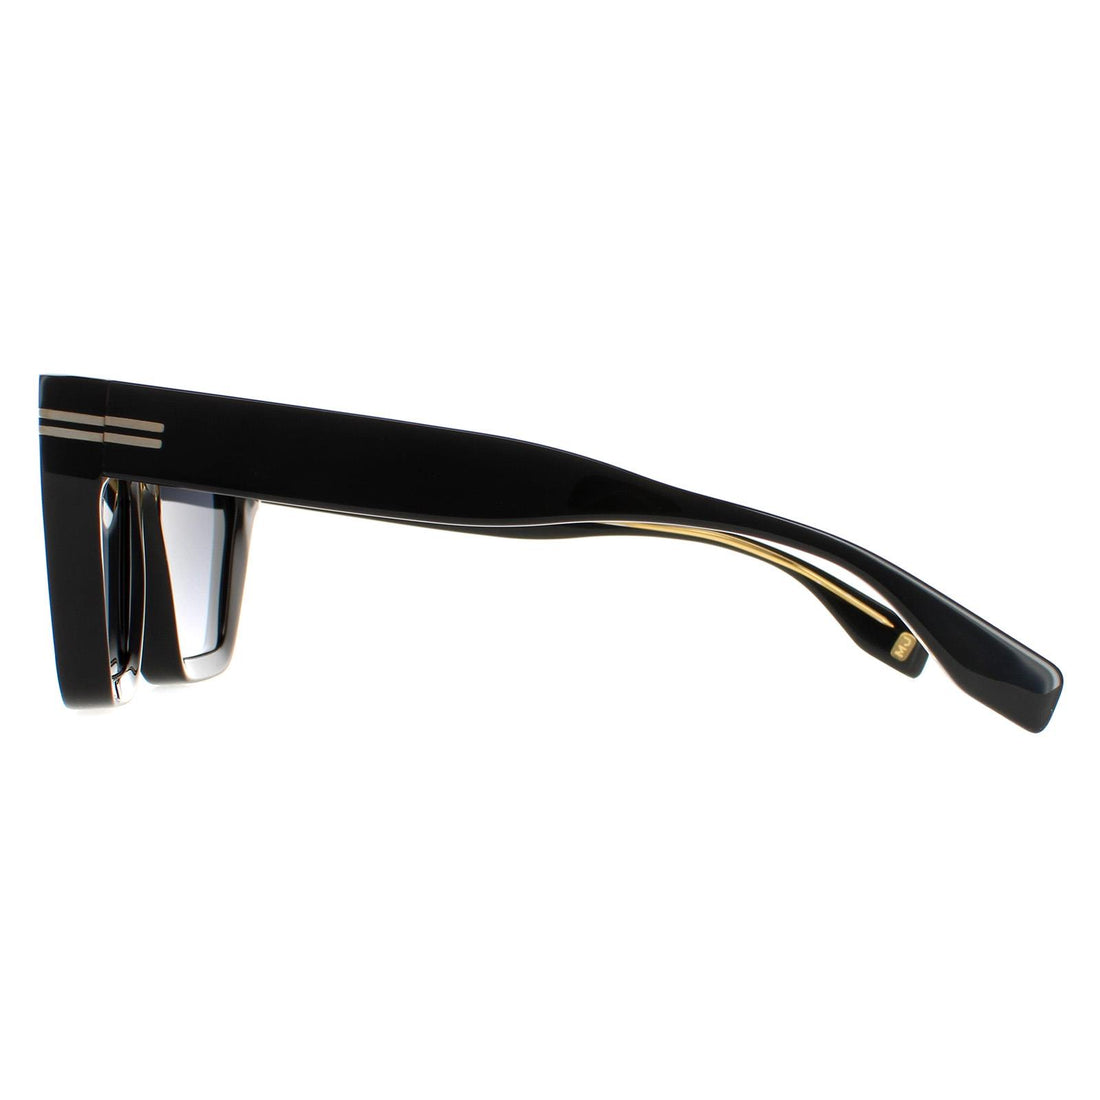 Marc Jacobs Sunglasses MJ 1001/S 807 9O Black Dark Grey Gradient